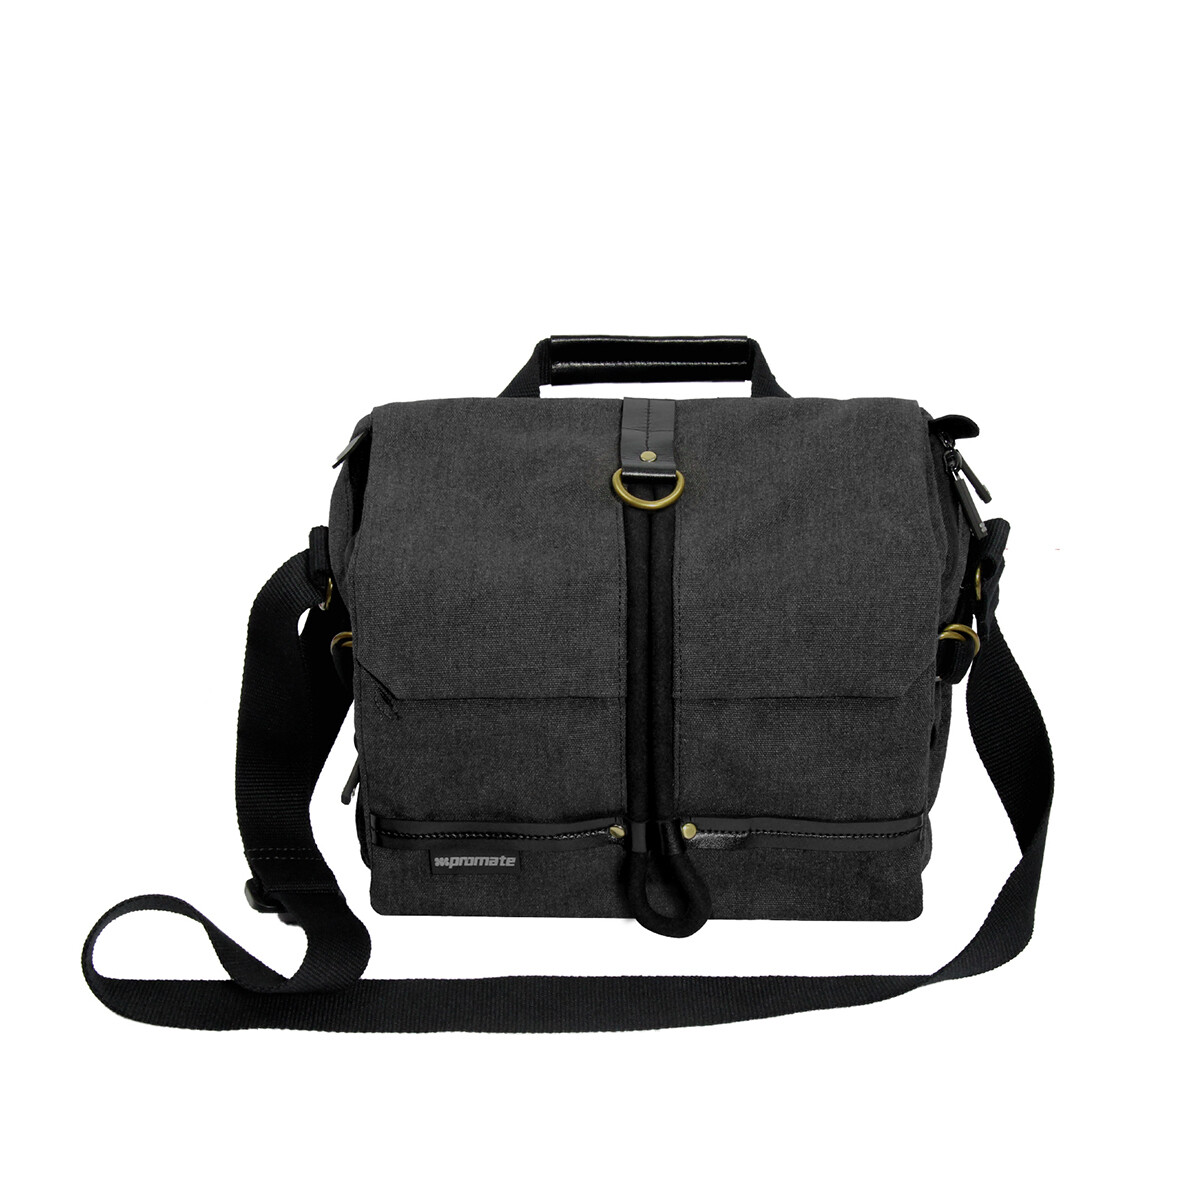 PROMATE XPLORE-S Contemporary SLR DSLR Camera & Tablet Bag with Adjustable Storage Water Resistant Cover & Shoulder Strap